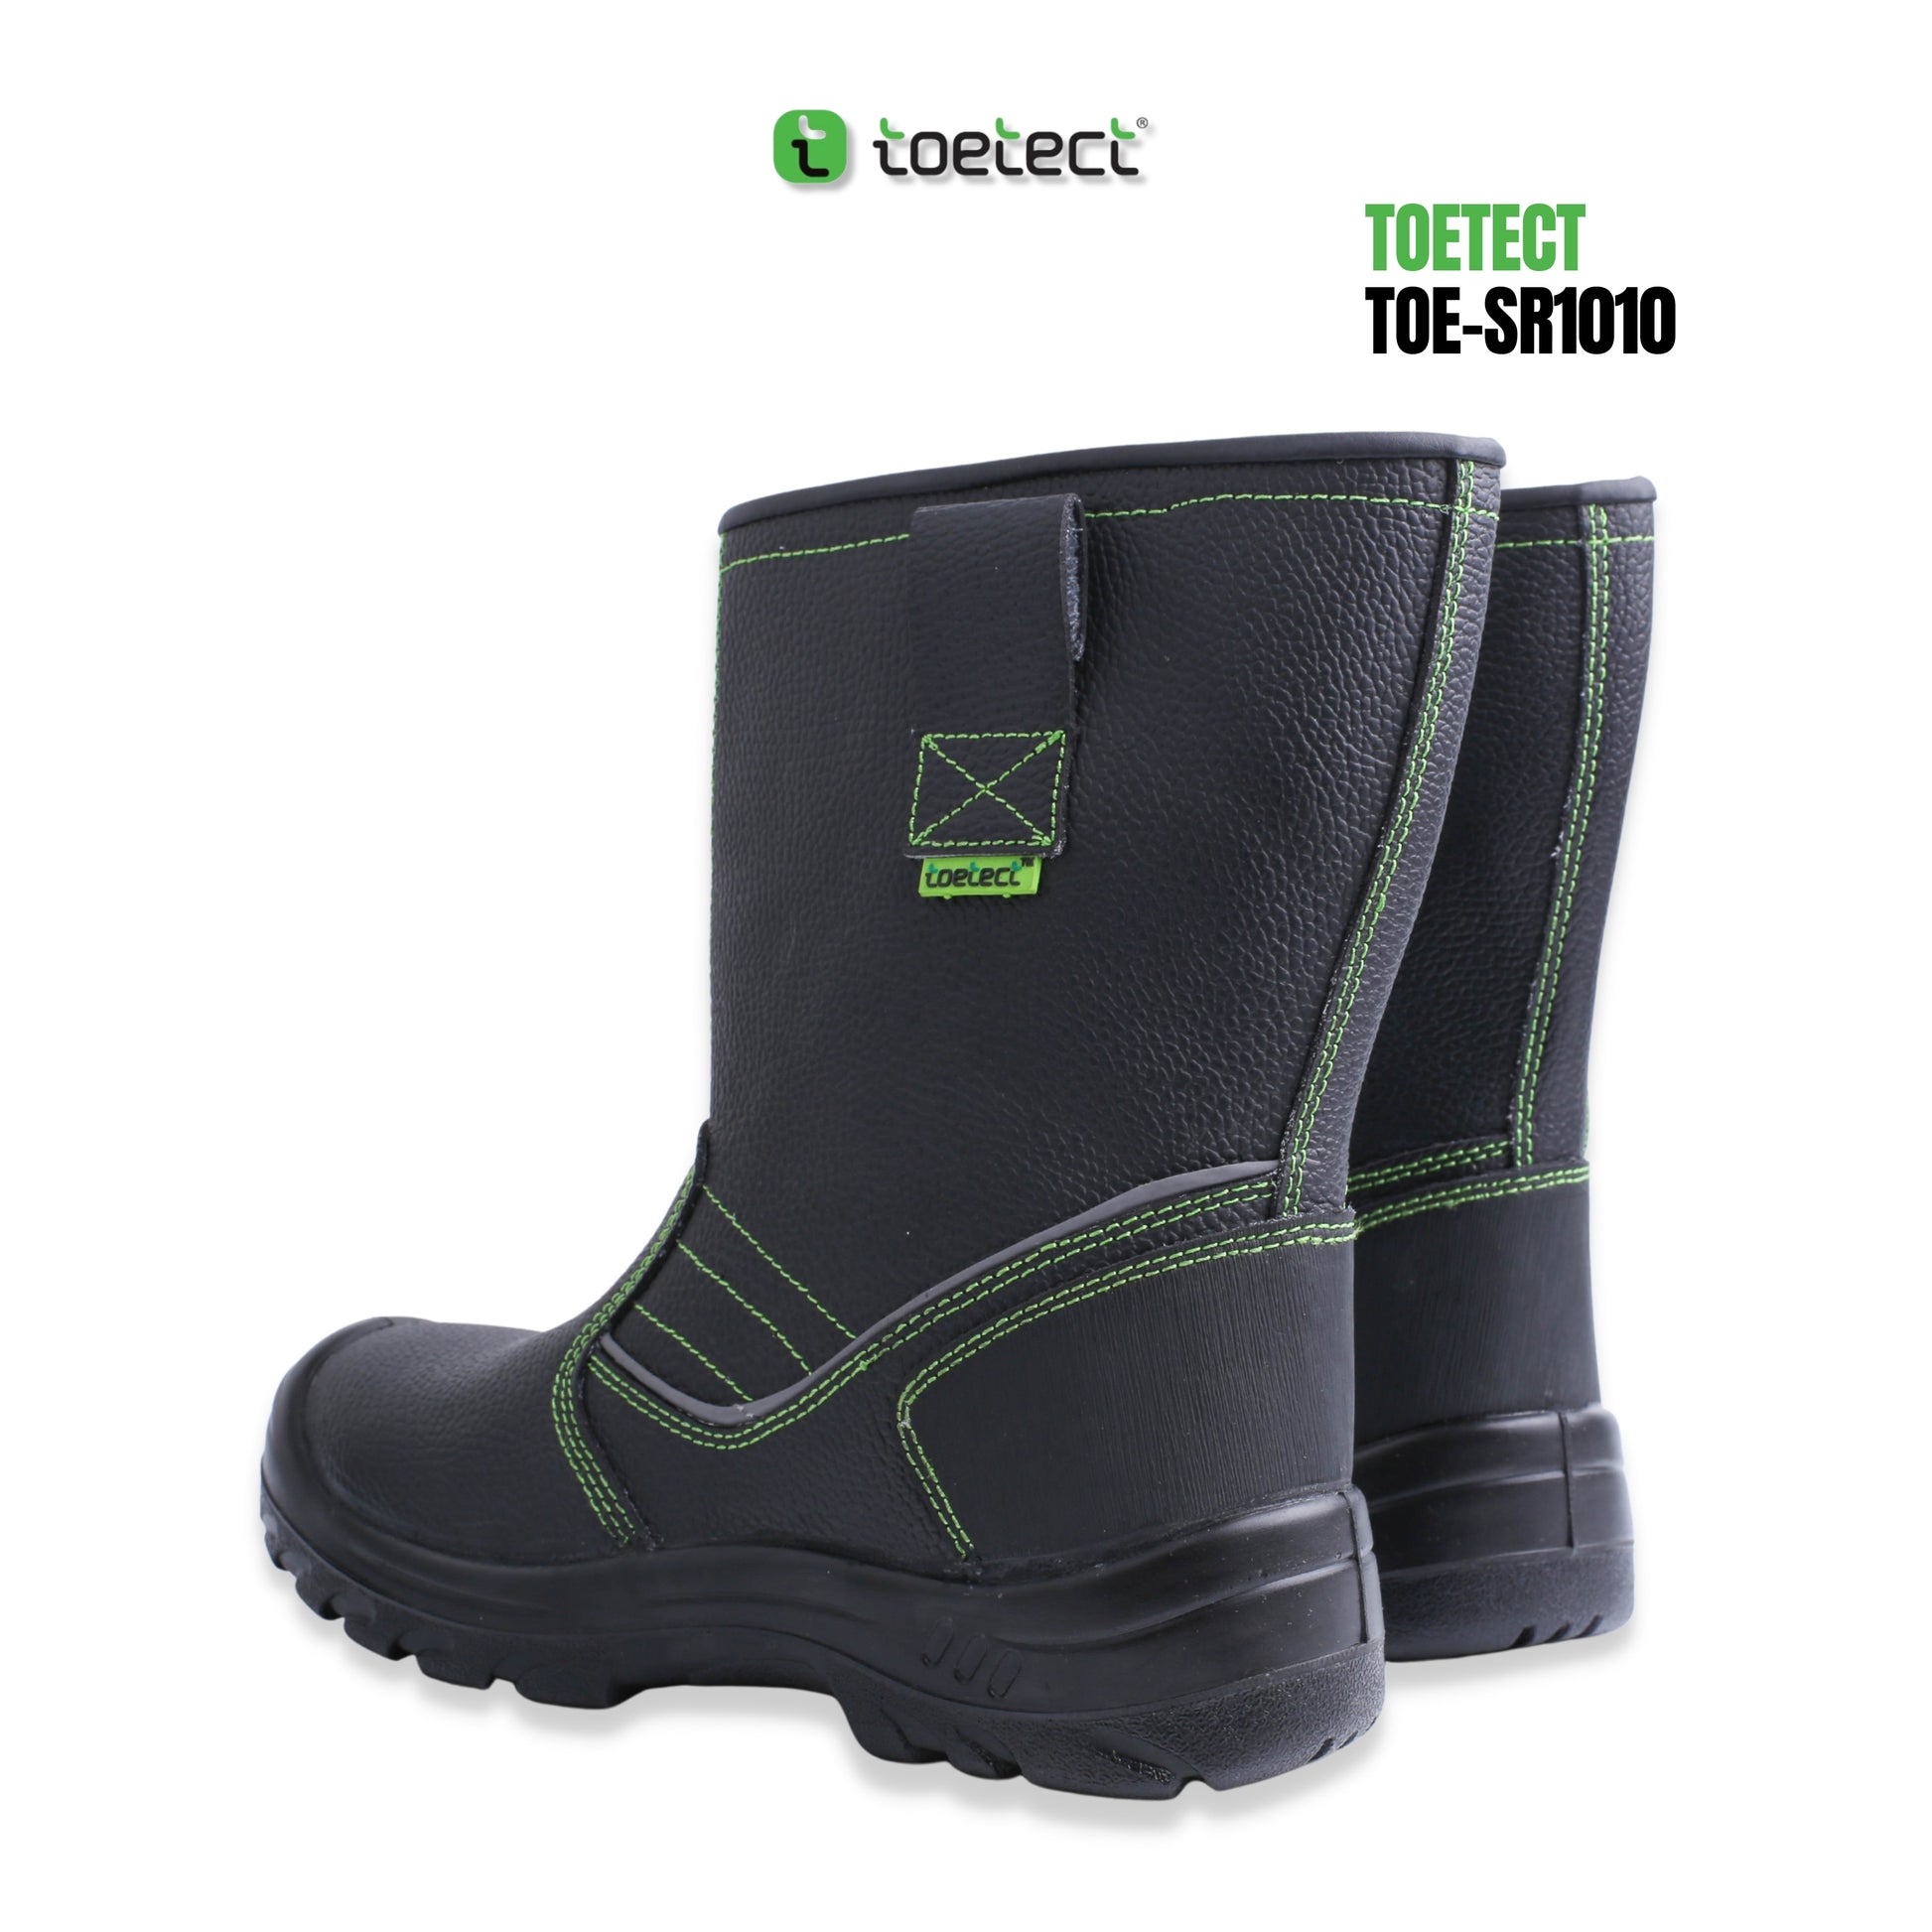 ToeTect TOE-SR1010 Men High Cut Slip-On Safety Boots